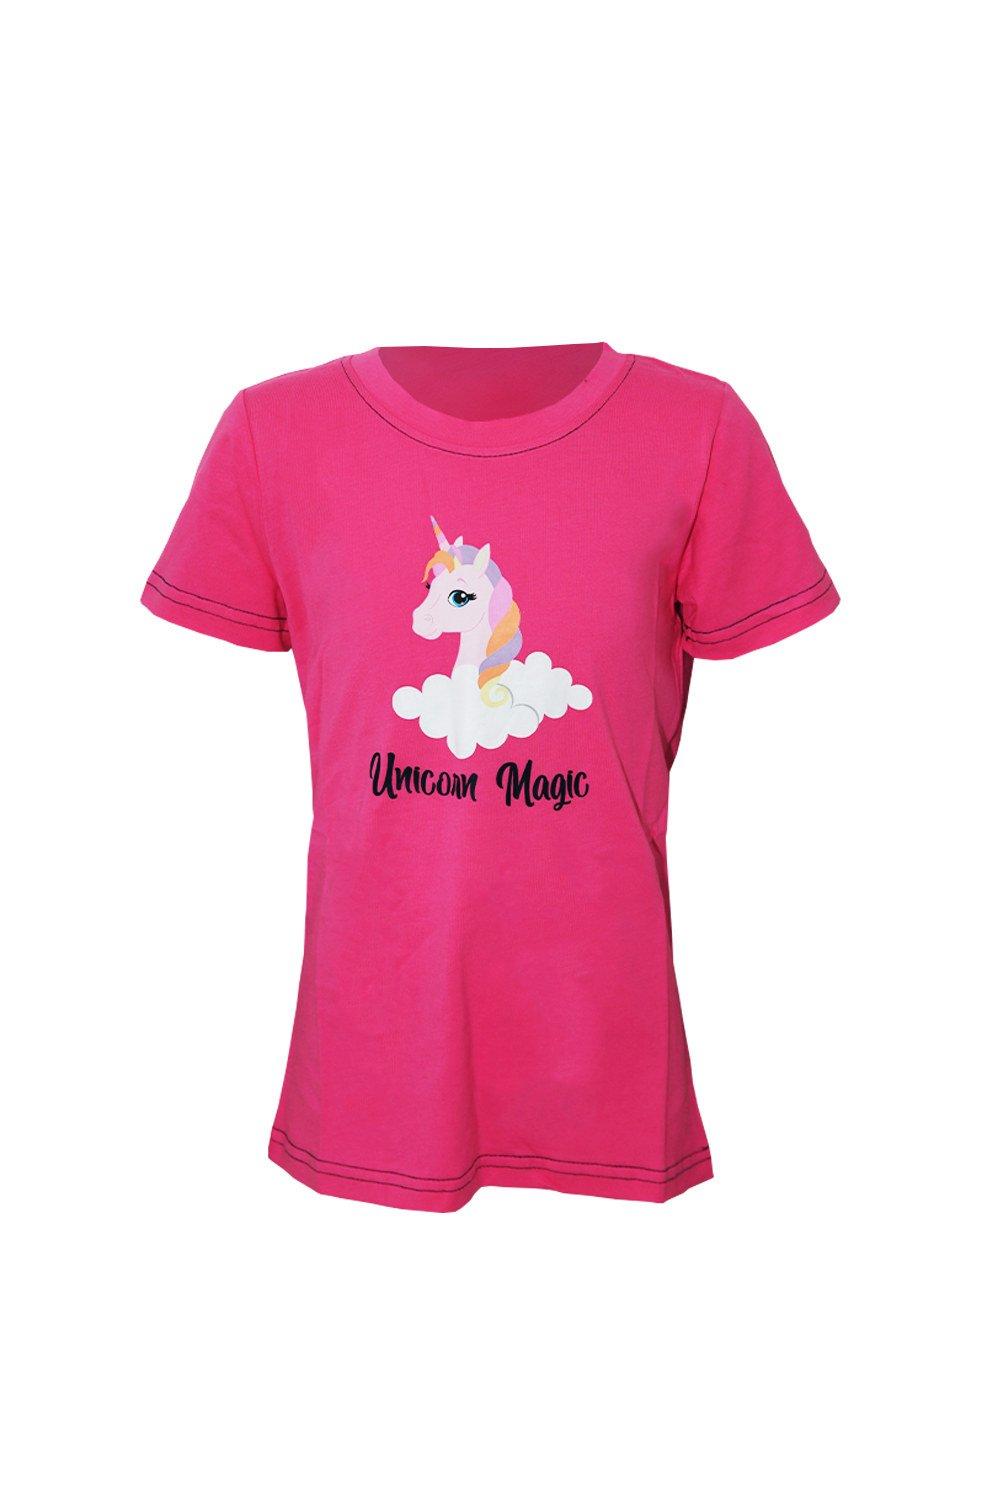 Unicorn Magic T-Shirt